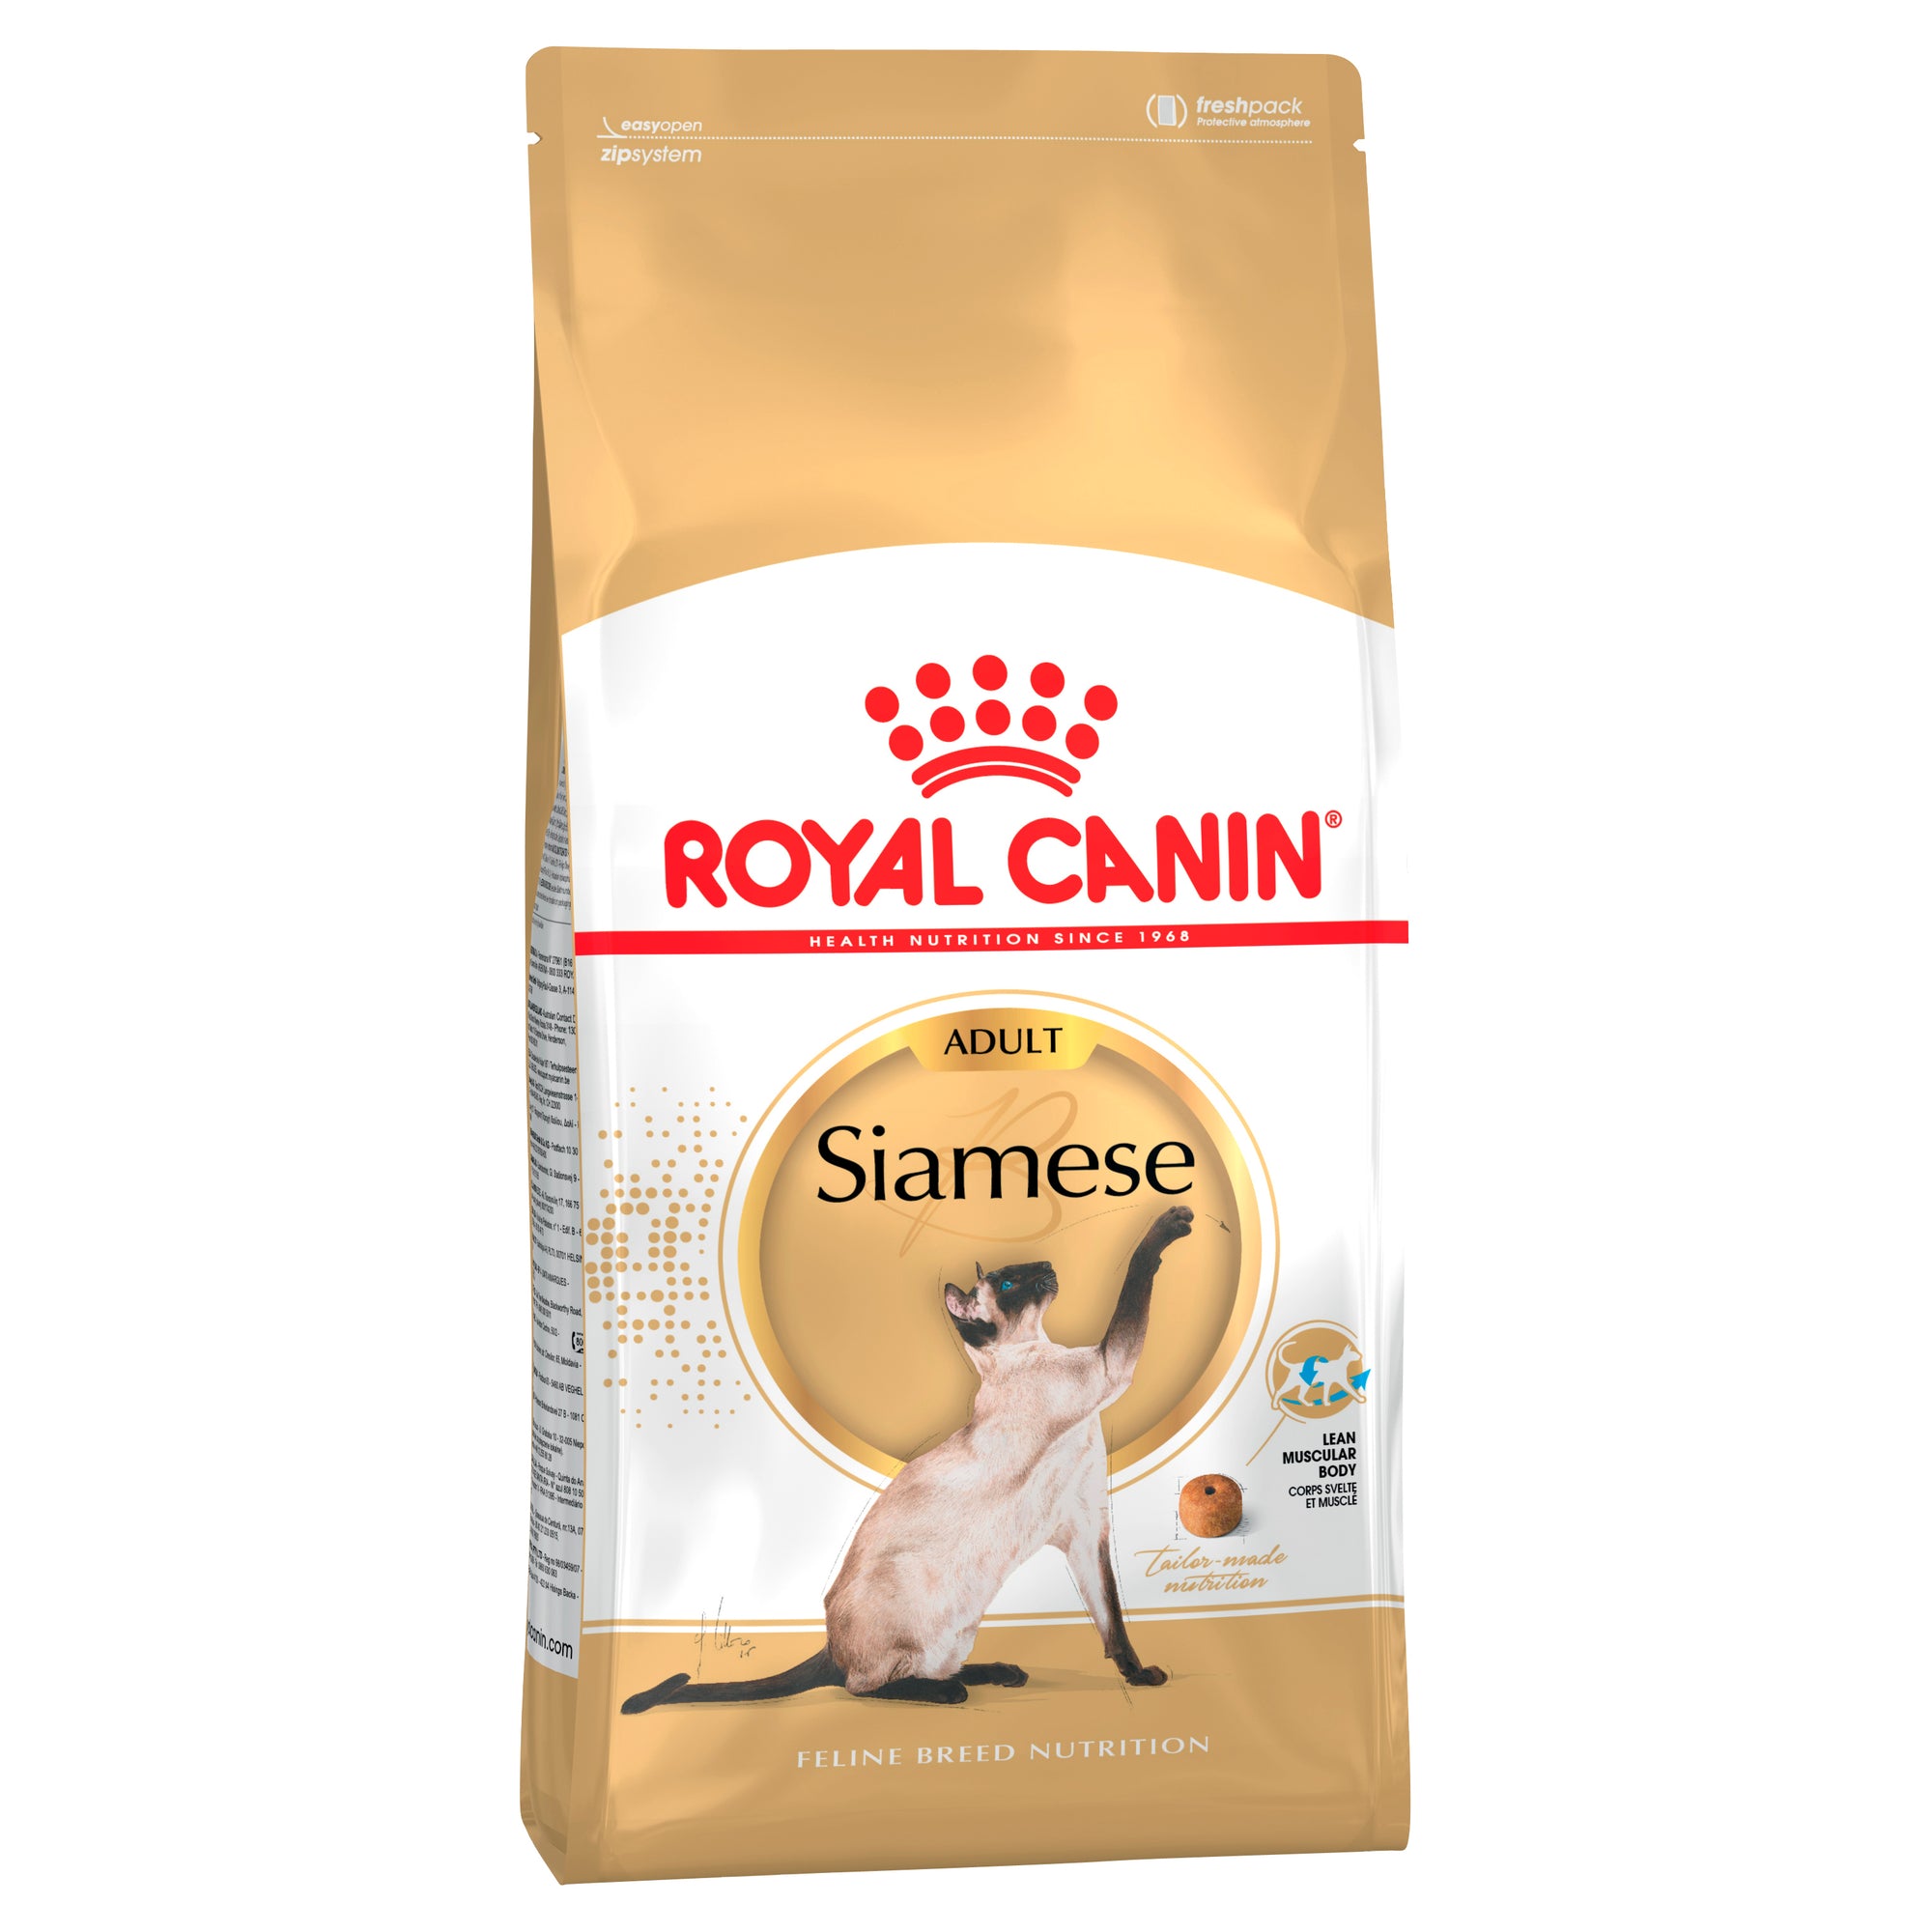 Royal Canin Siamese - RSPCA VIC